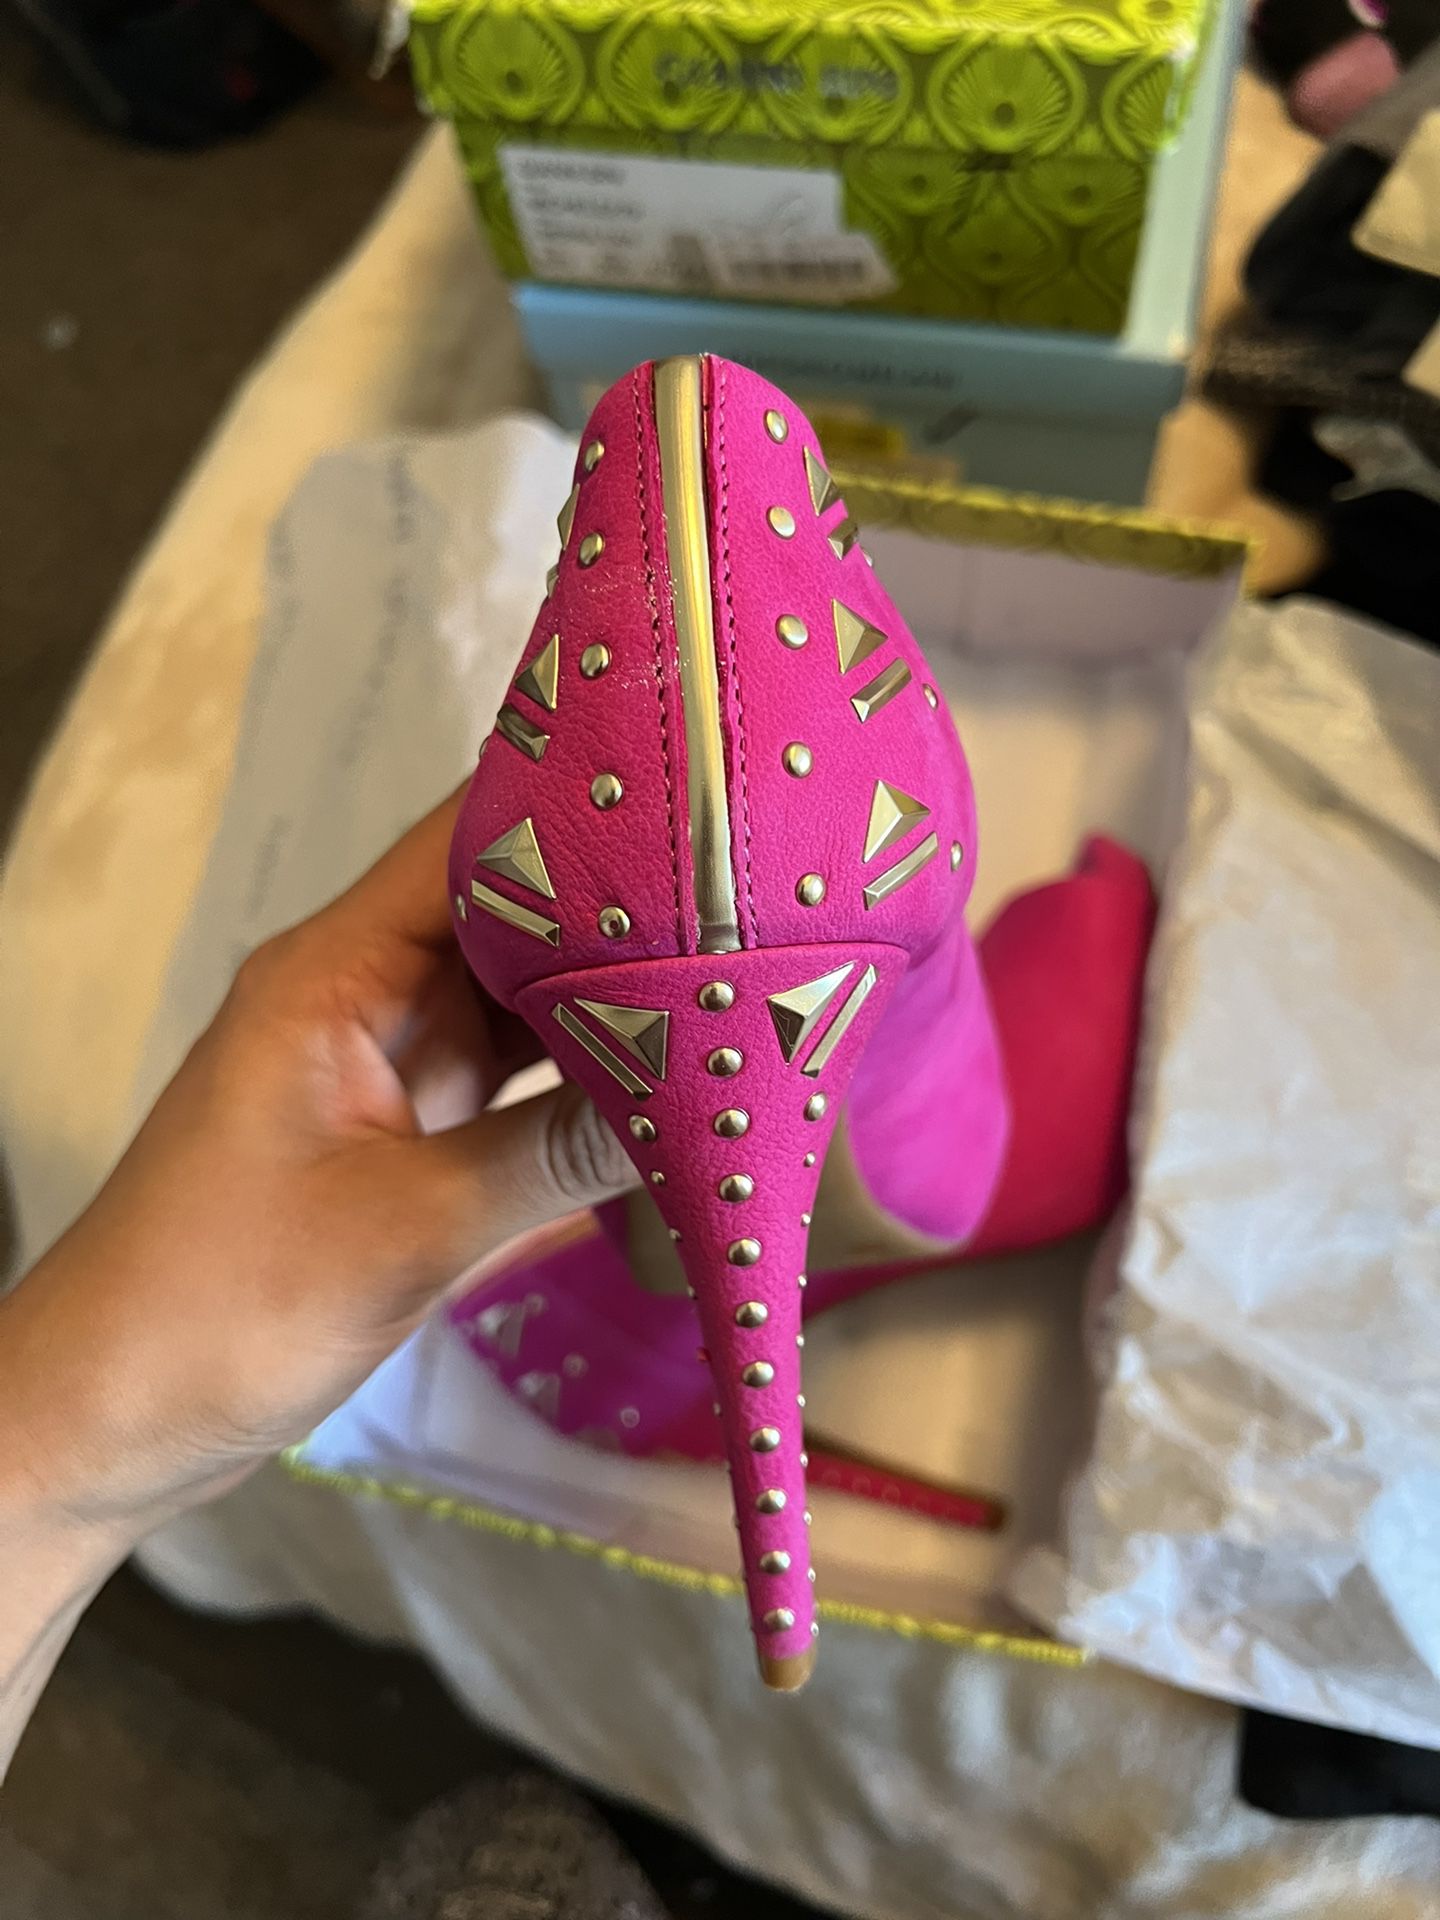 Hot Pink Gianni Bini Heels